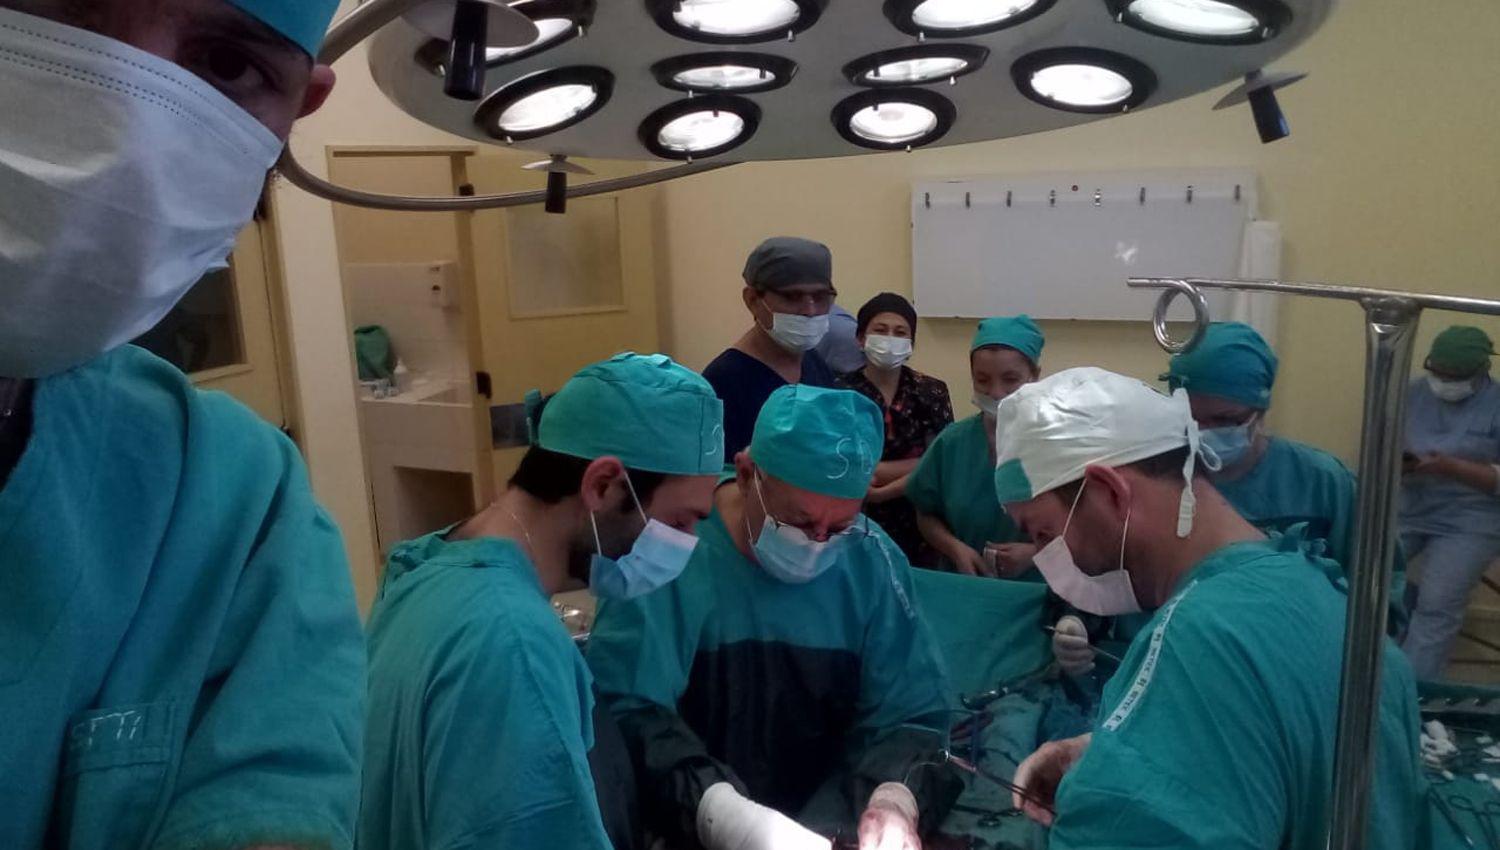 Cirugiacutea de alta complejidad en el Hospital Zonal de Friacuteas